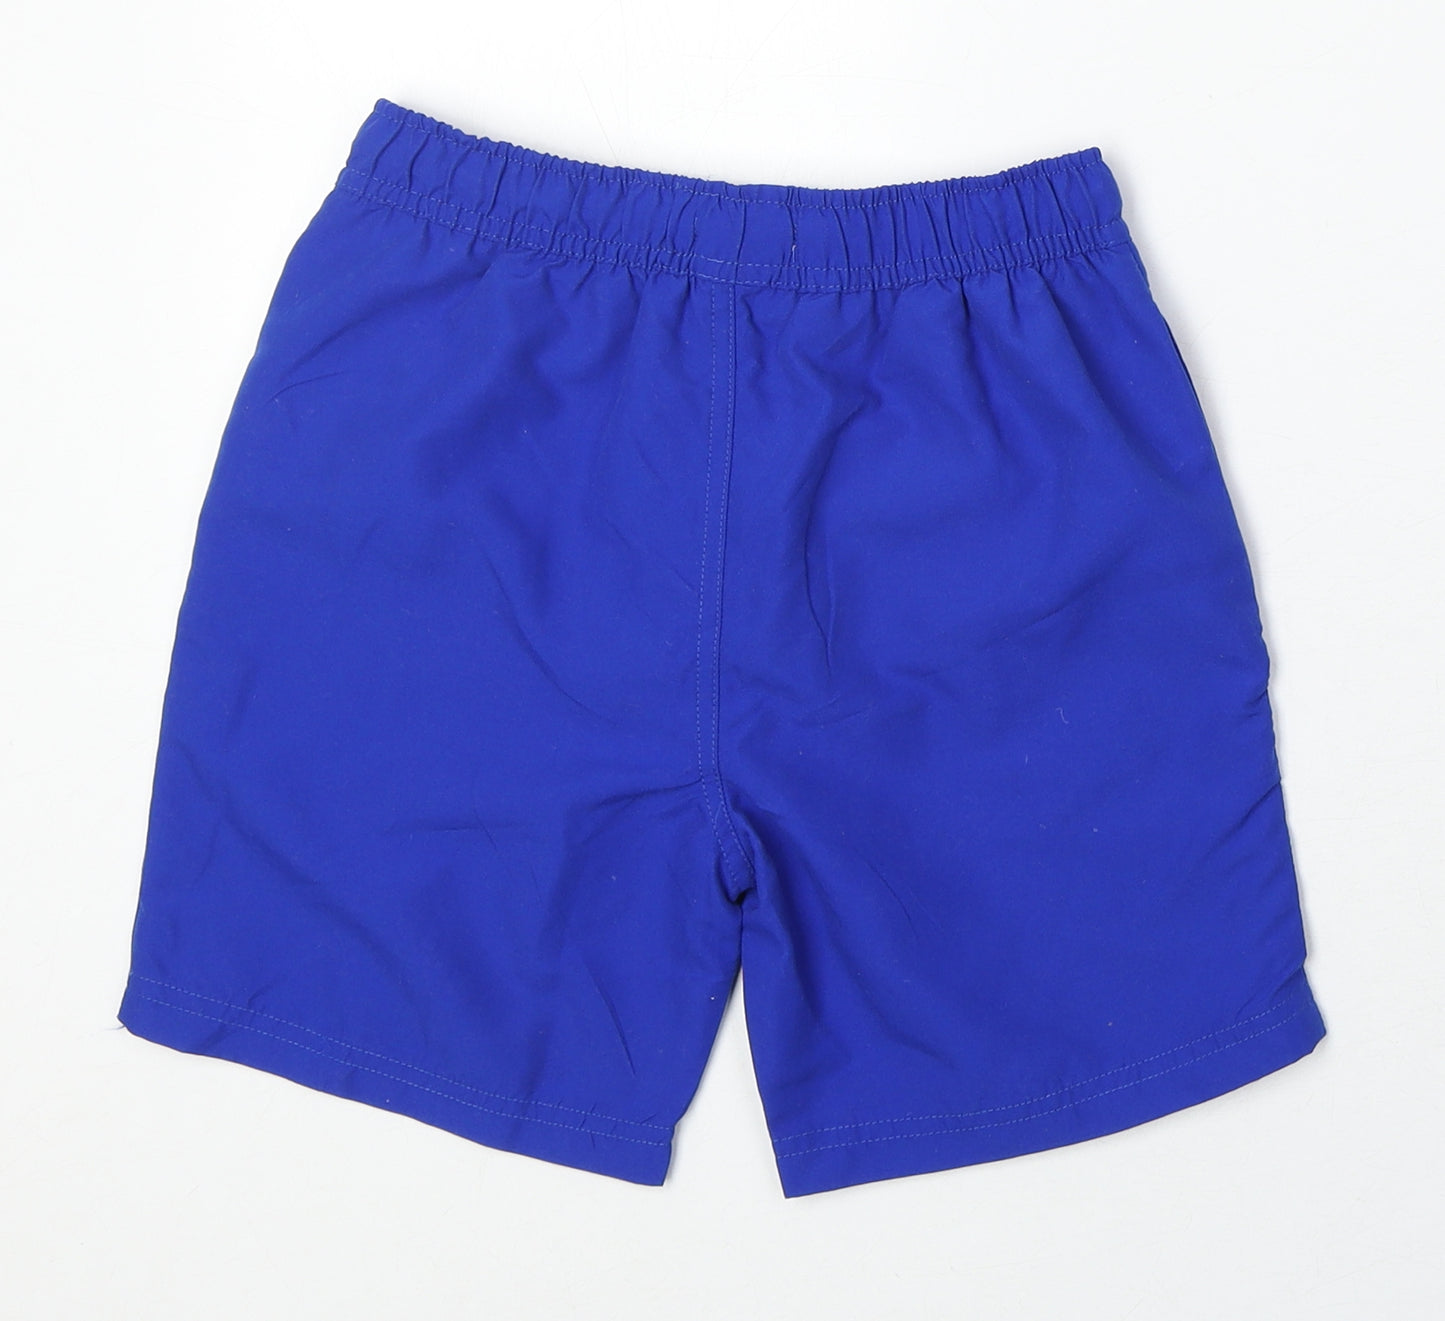 Debenhams Boys Blue Polyester Sweat Shorts Size 6-7 Years Regular Drawstring - Swim Shorts